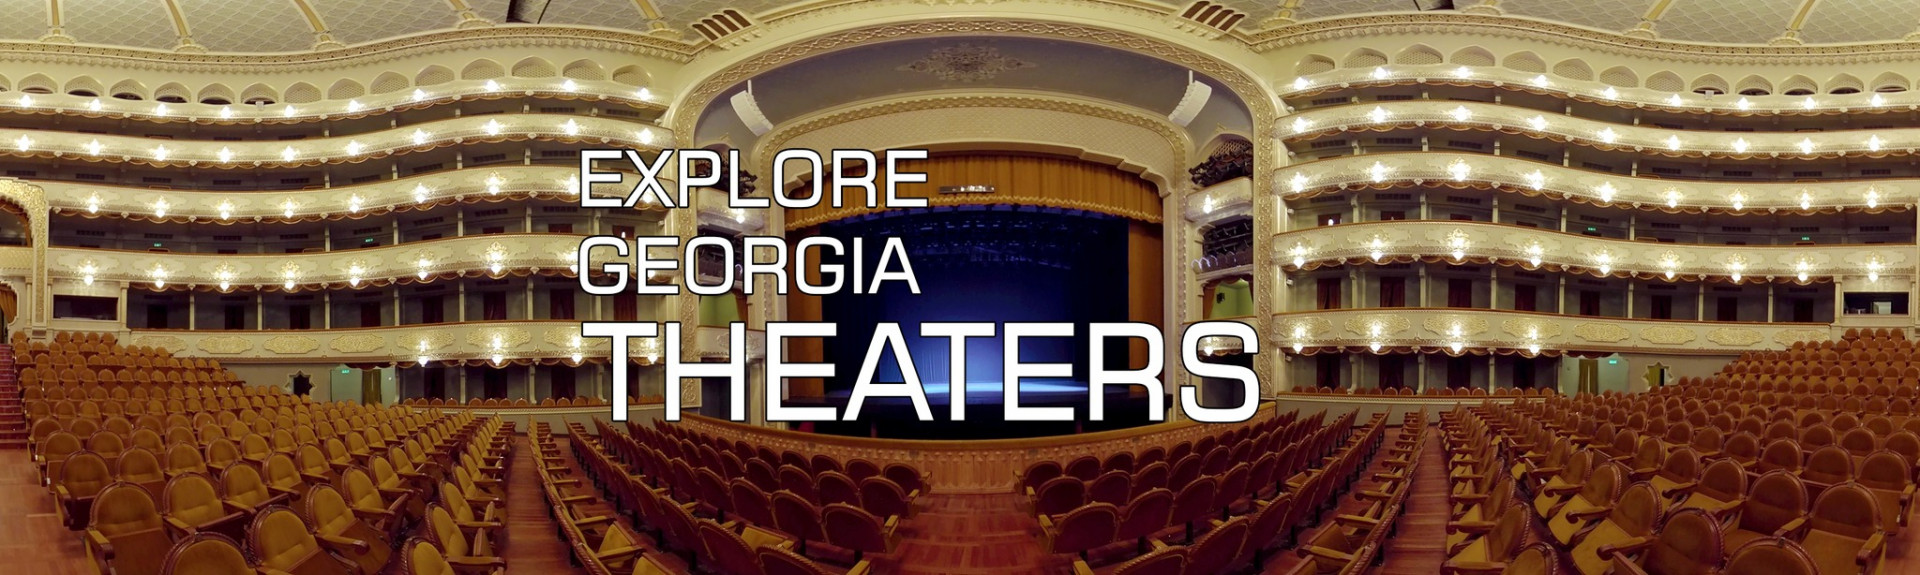 Explore Georgia - Theaters